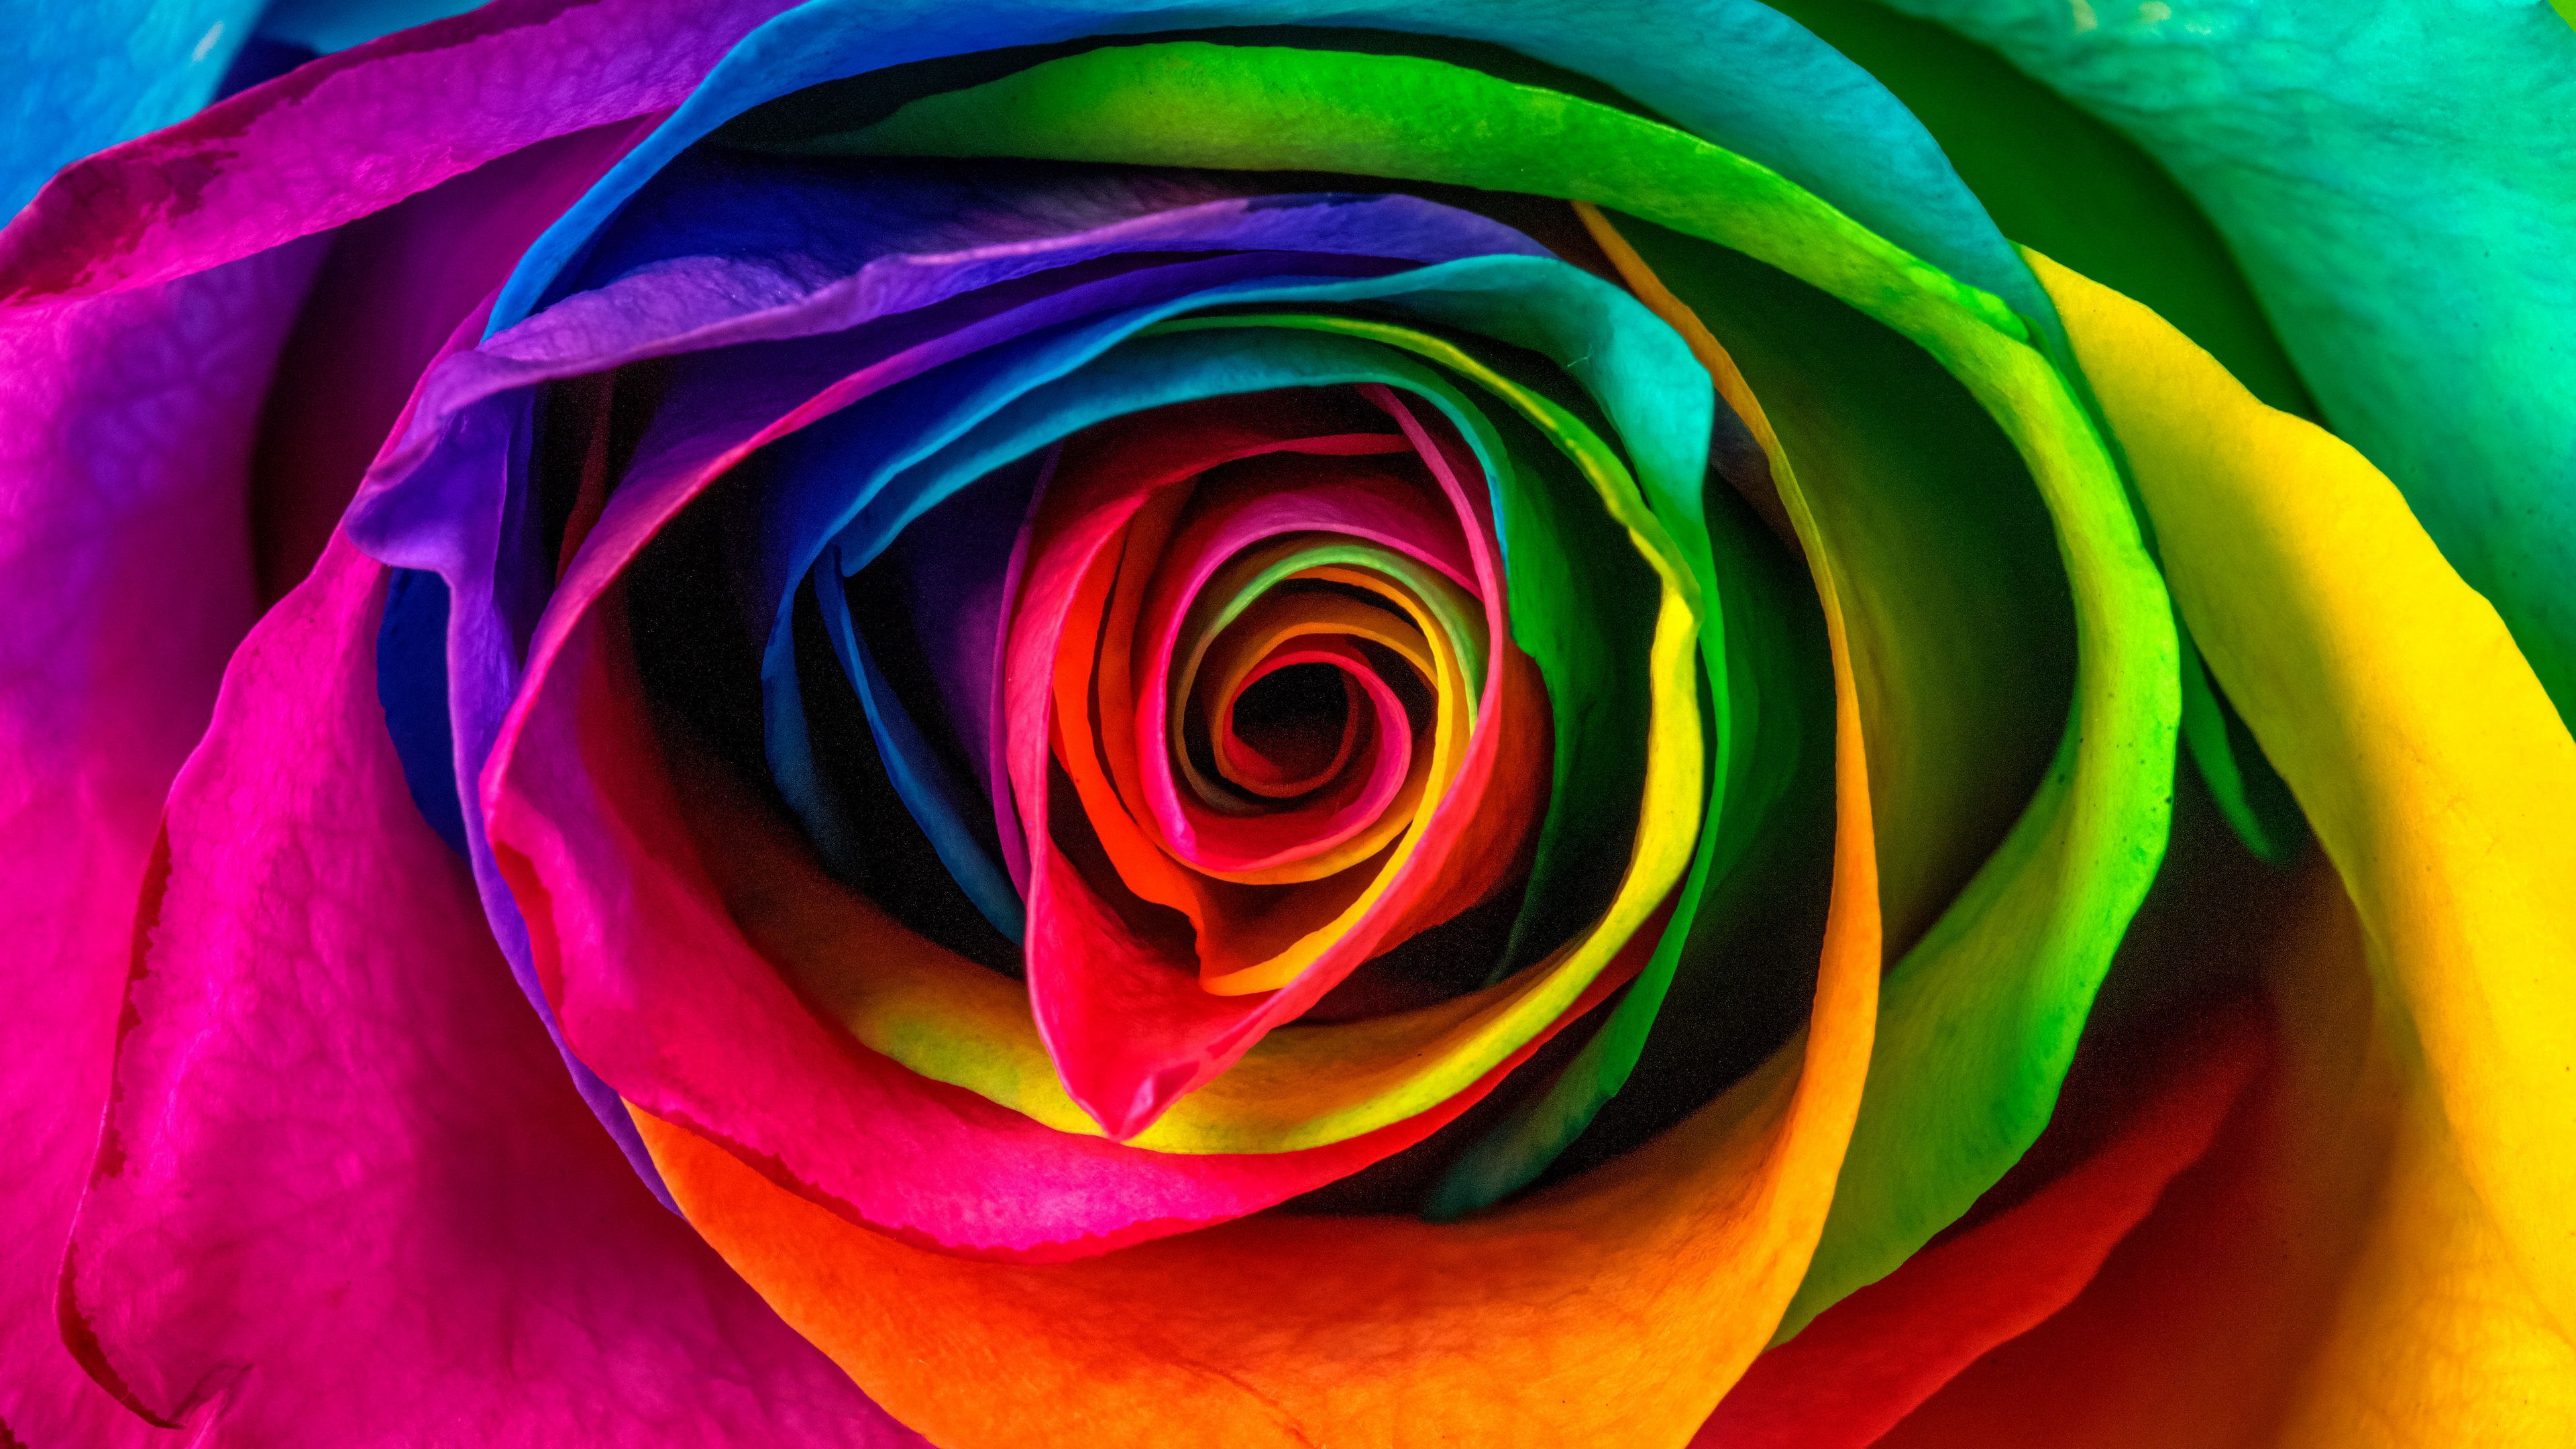 Download wallpaper 3840x2160 rose, petals, colorful, flower 4k uhd 16:9 HD background